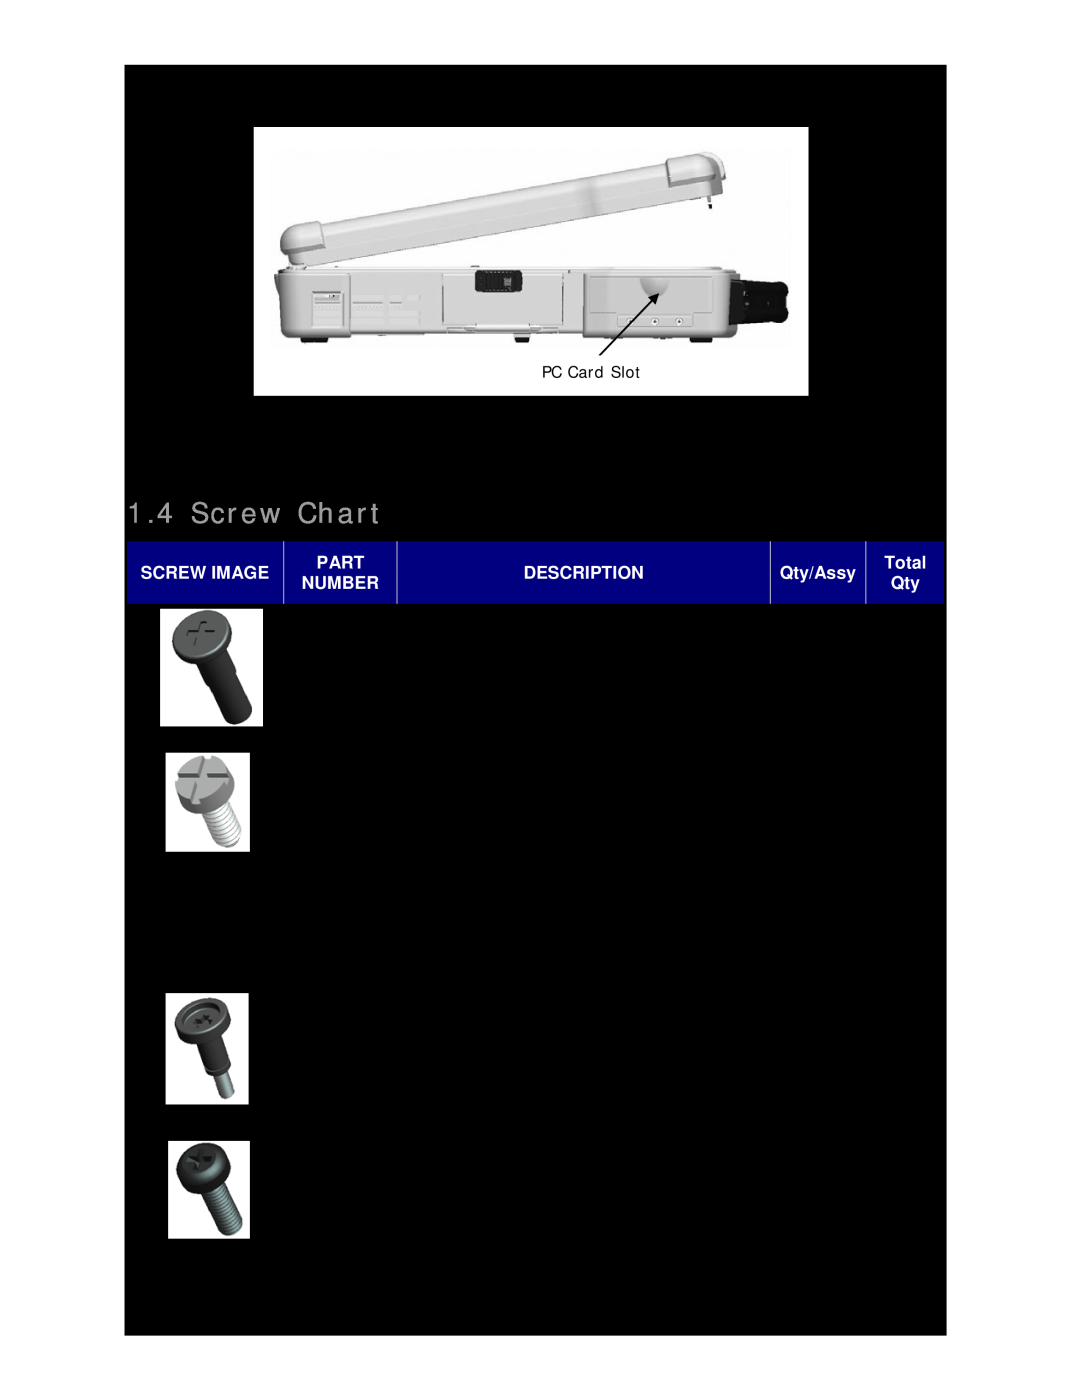 Dell D630 service manual Screw Chart, Screw Image, Part Number, Description, Qty/Assy, Total 